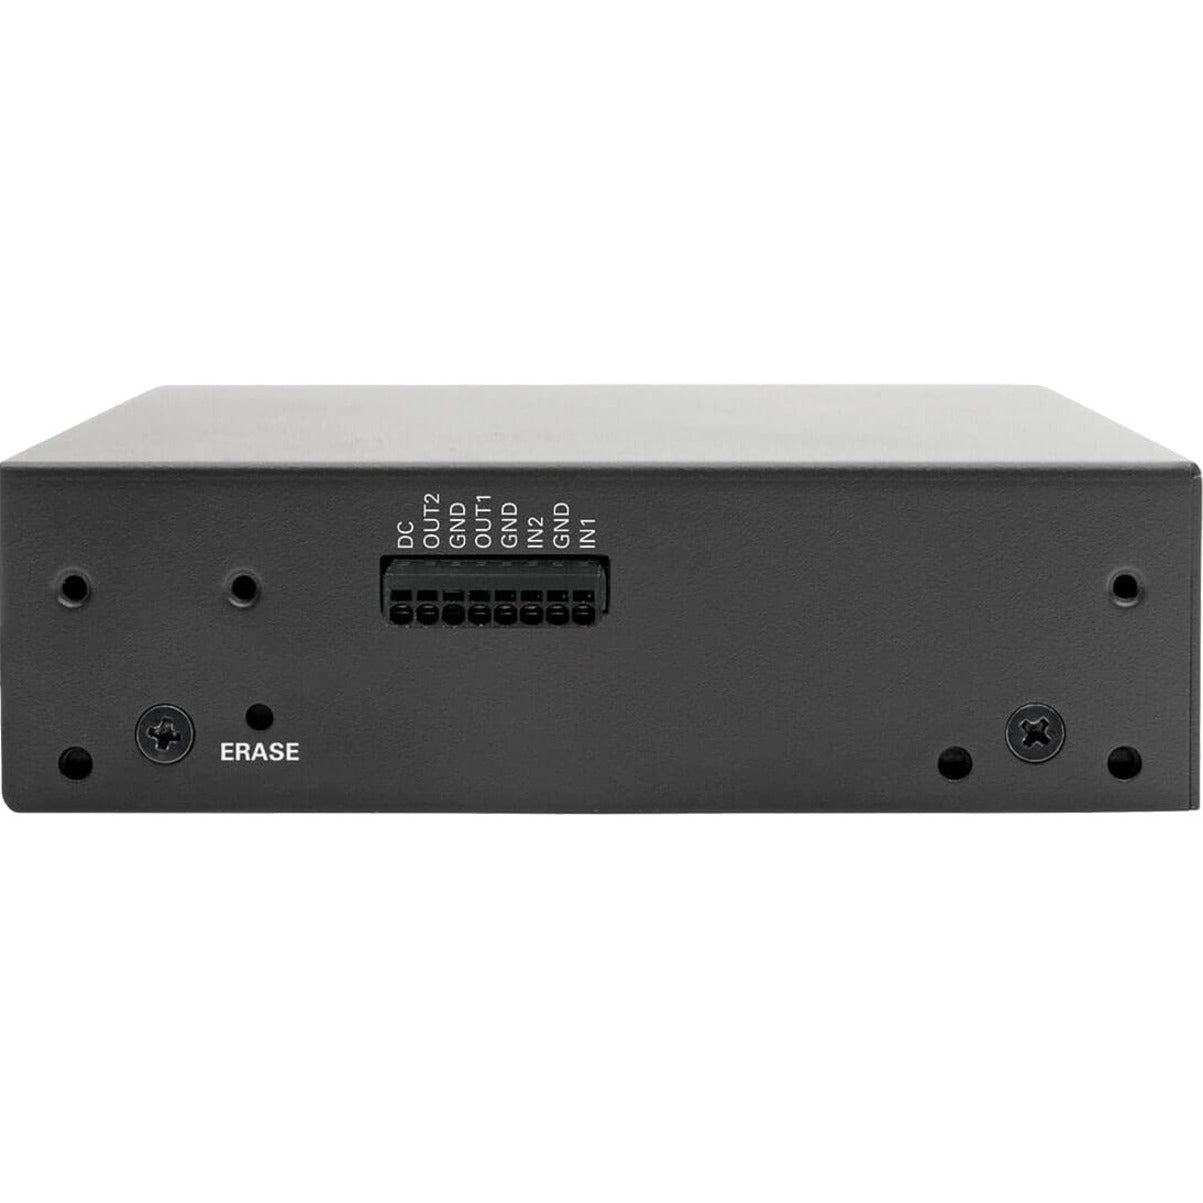 Tripp Lite B093-008-2E4U 8-Port Serial Console Server with Dual GbE NIC, Flash and 4 USB Ports, TAA Compliant